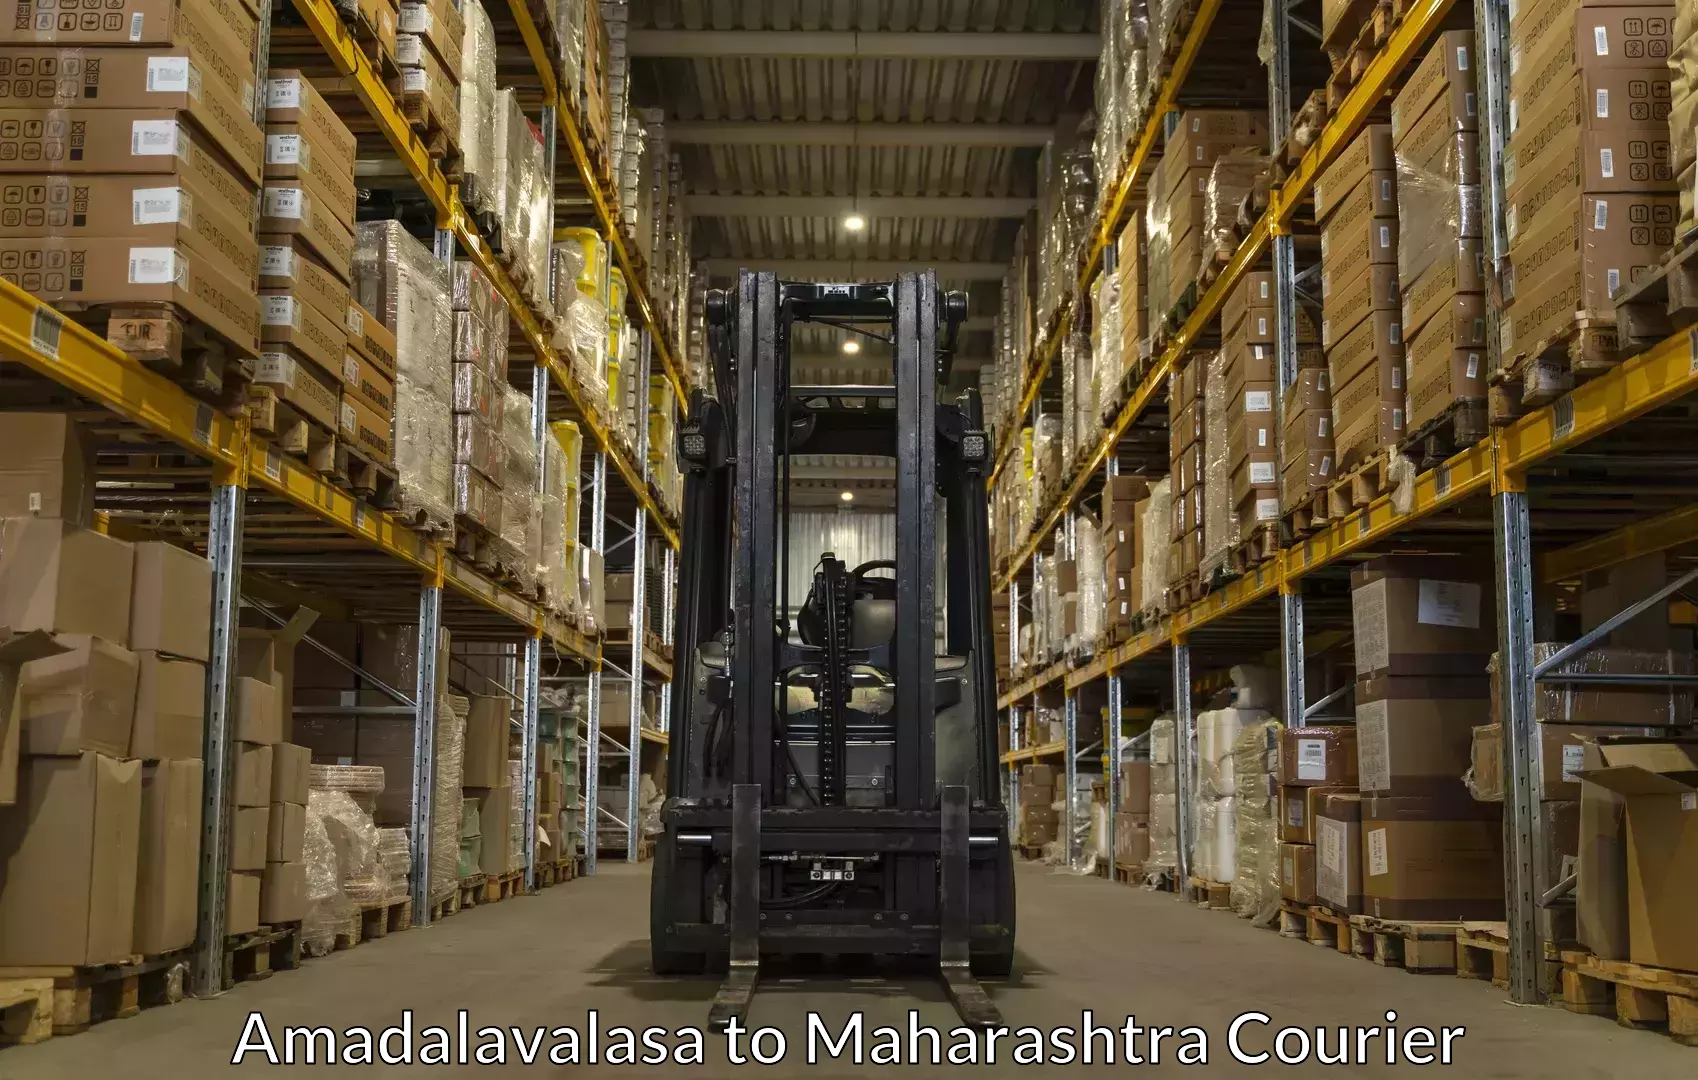 Efficient moving company Amadalavalasa to Osmanabad